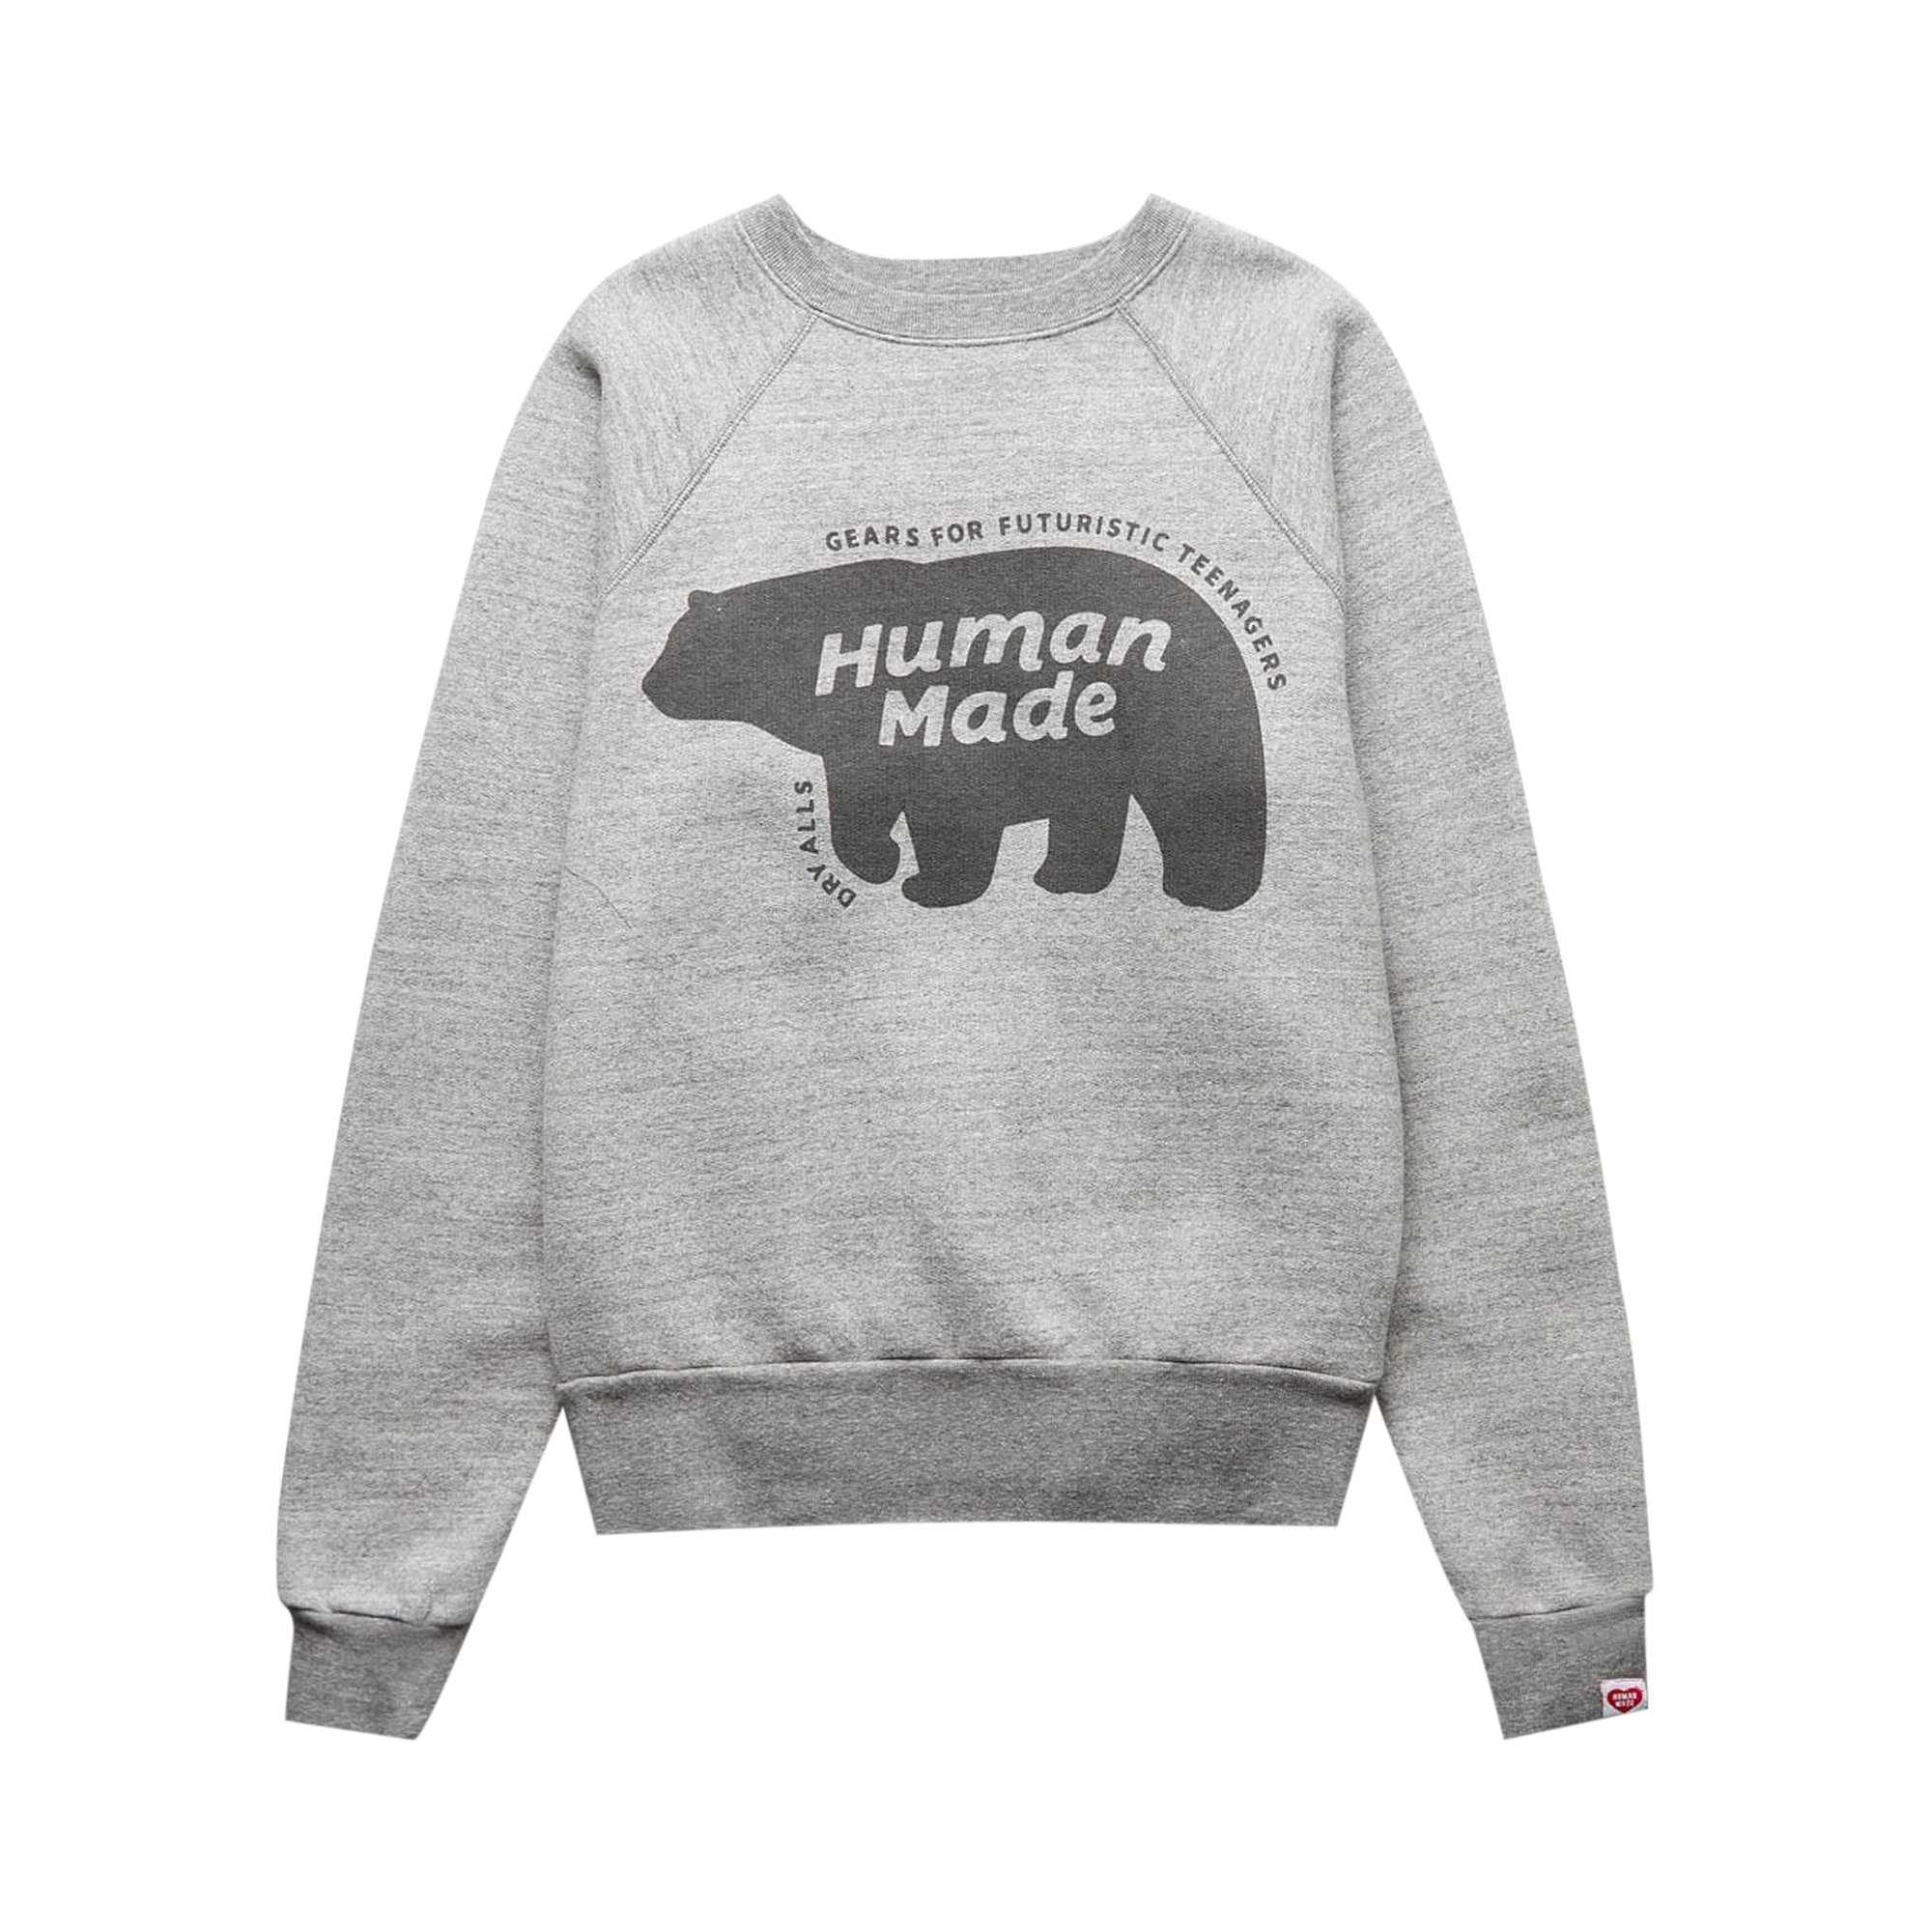 Buy Human Made Raglan Crewneck Sweatshirt 'Grey' - HM24CS019 GREY